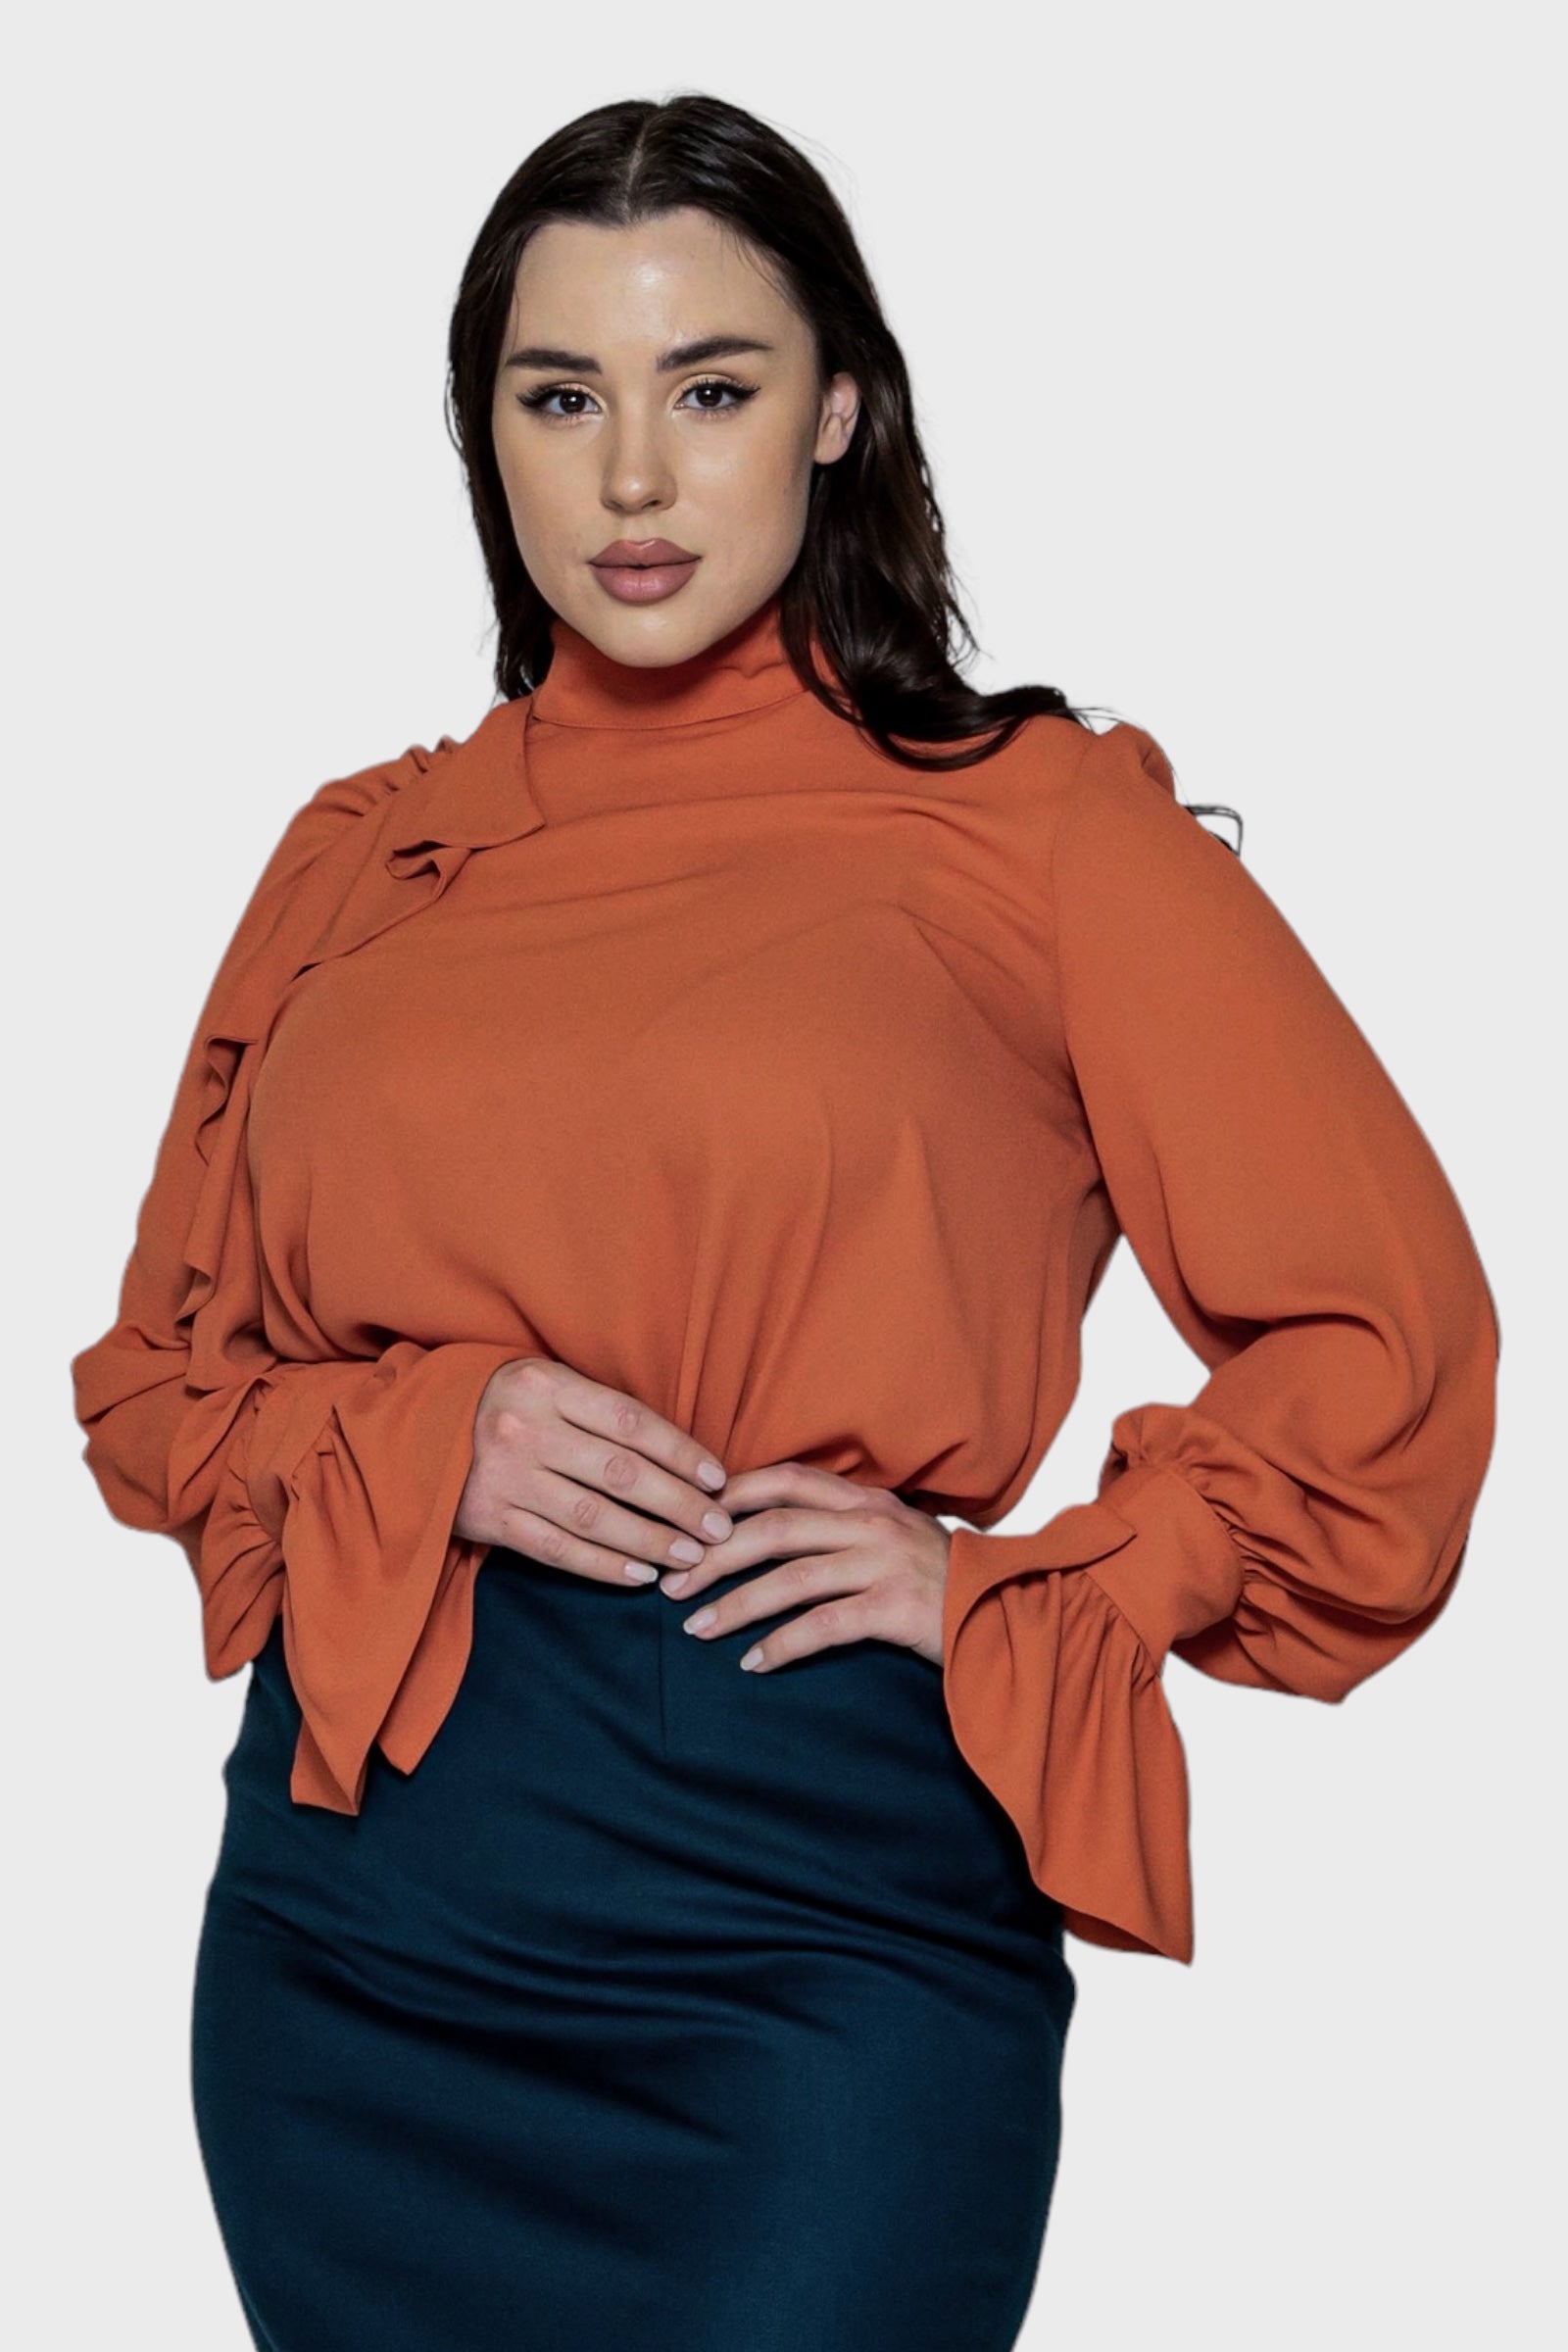 Anna Plus Size Orange Ruffled Georgette Blouse Top by Sara Sabella Italian Women's Fashion 